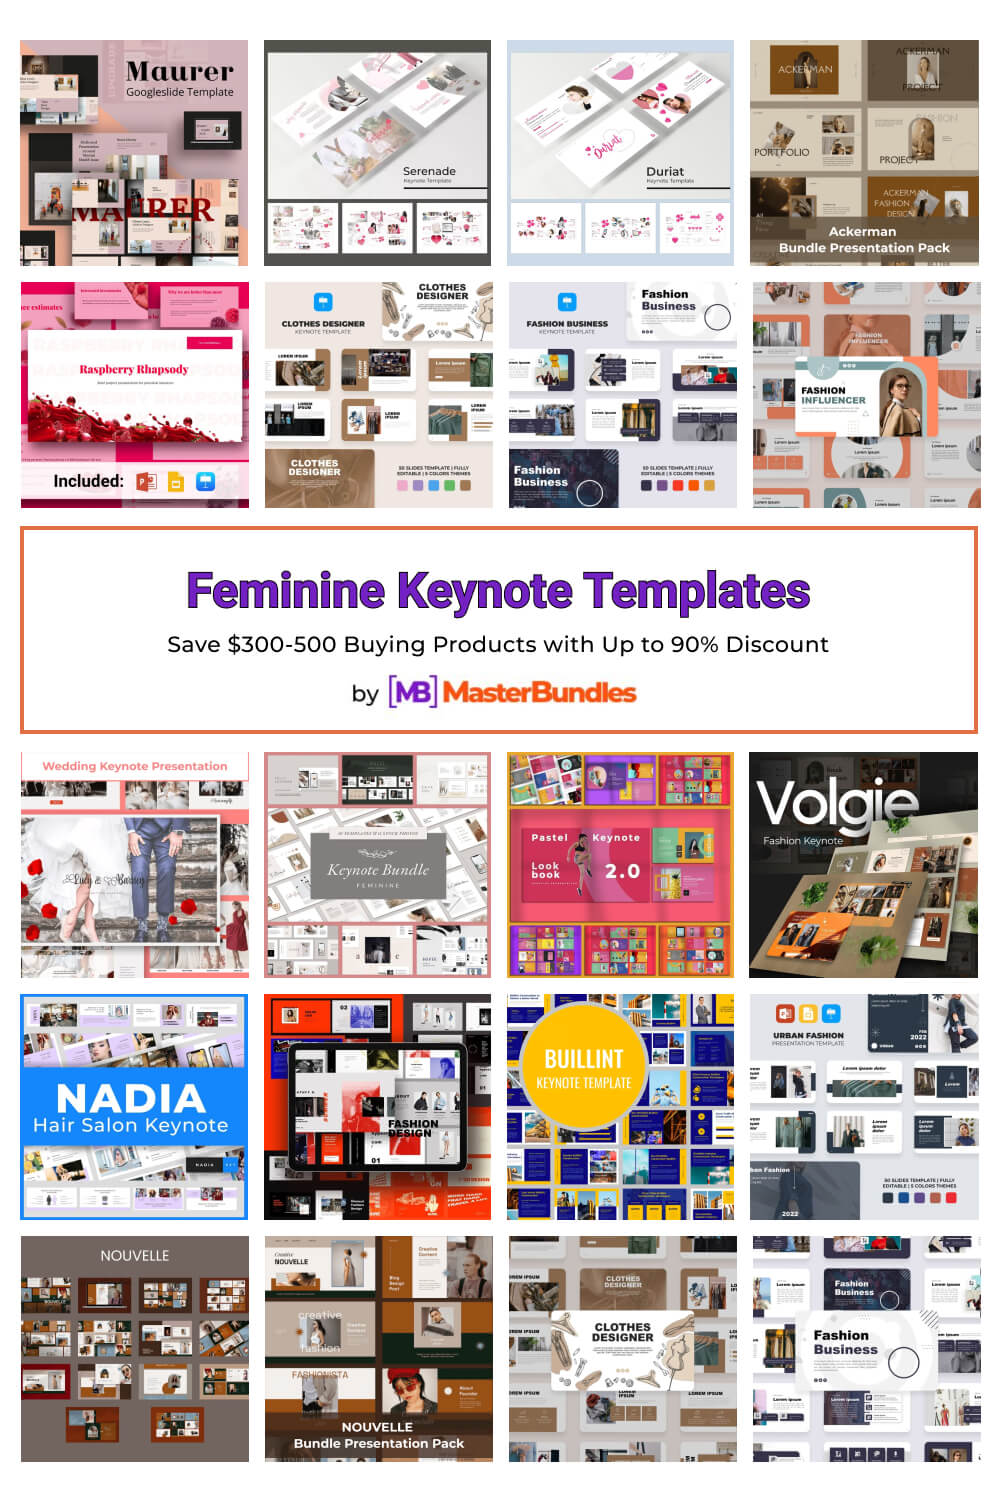 feminine keynote templates pinterest image.